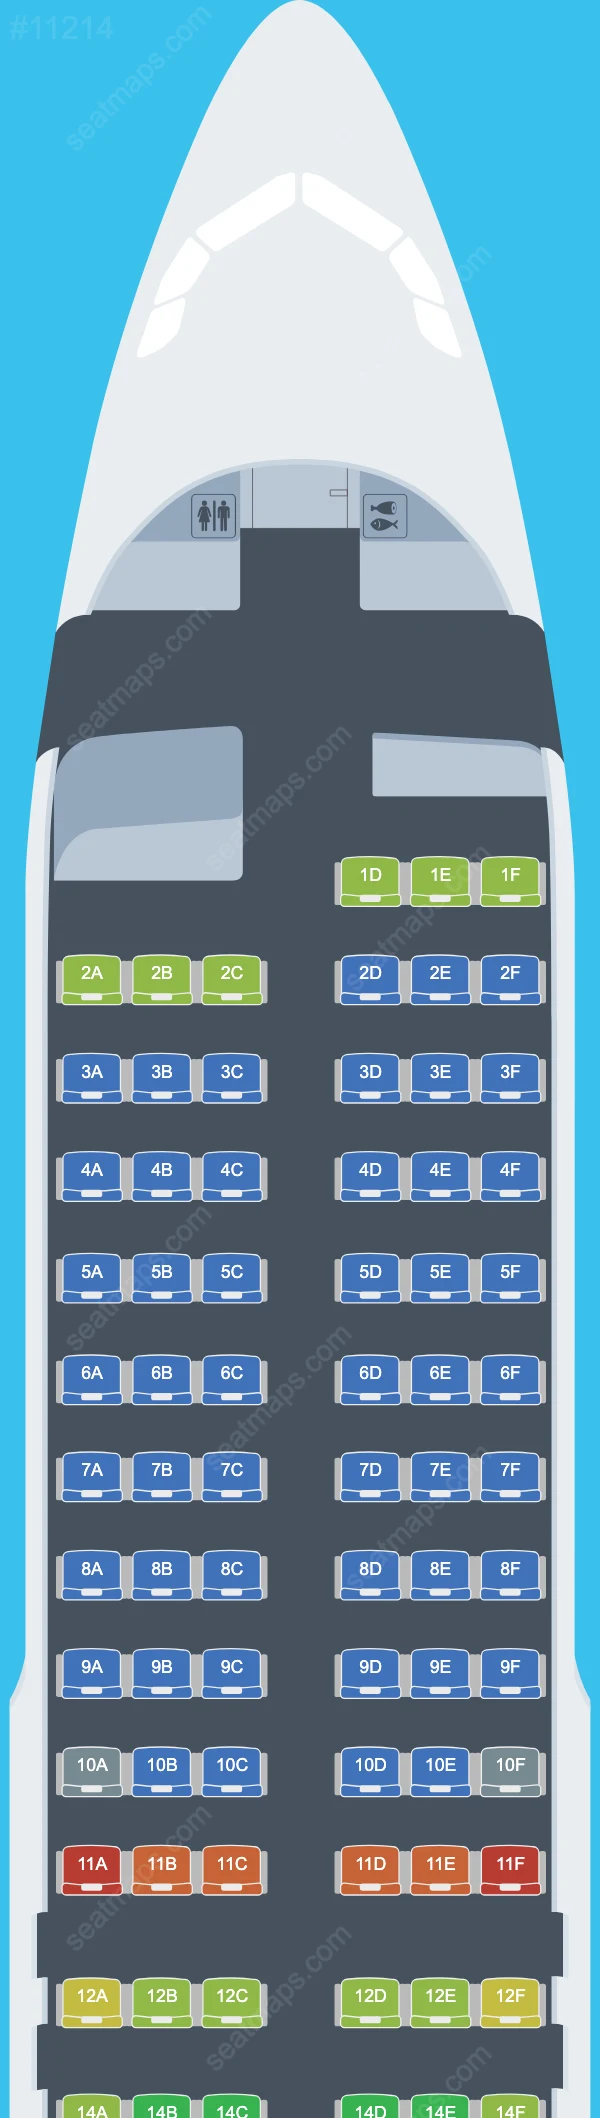 Atlantic Airways Airbus A320 Seat Maps A320-200